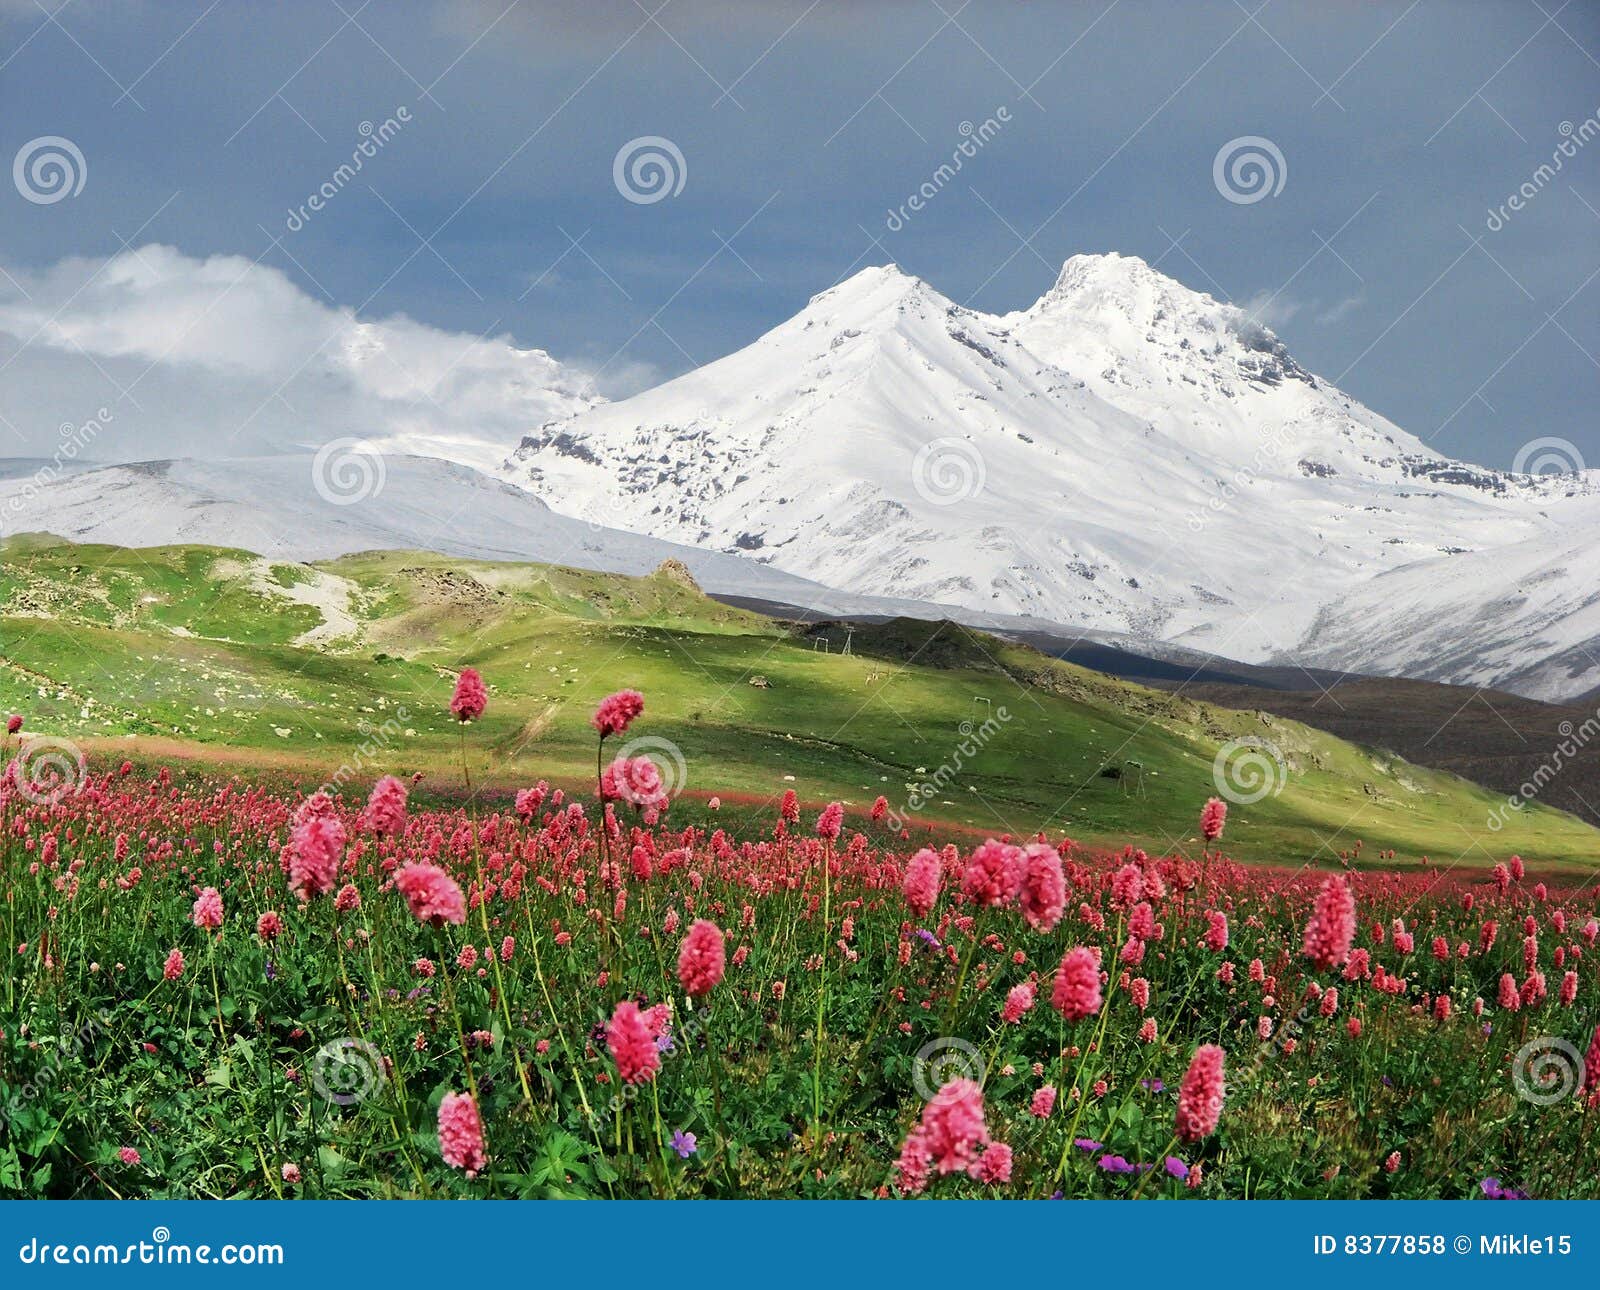 mountains of the caucasus.